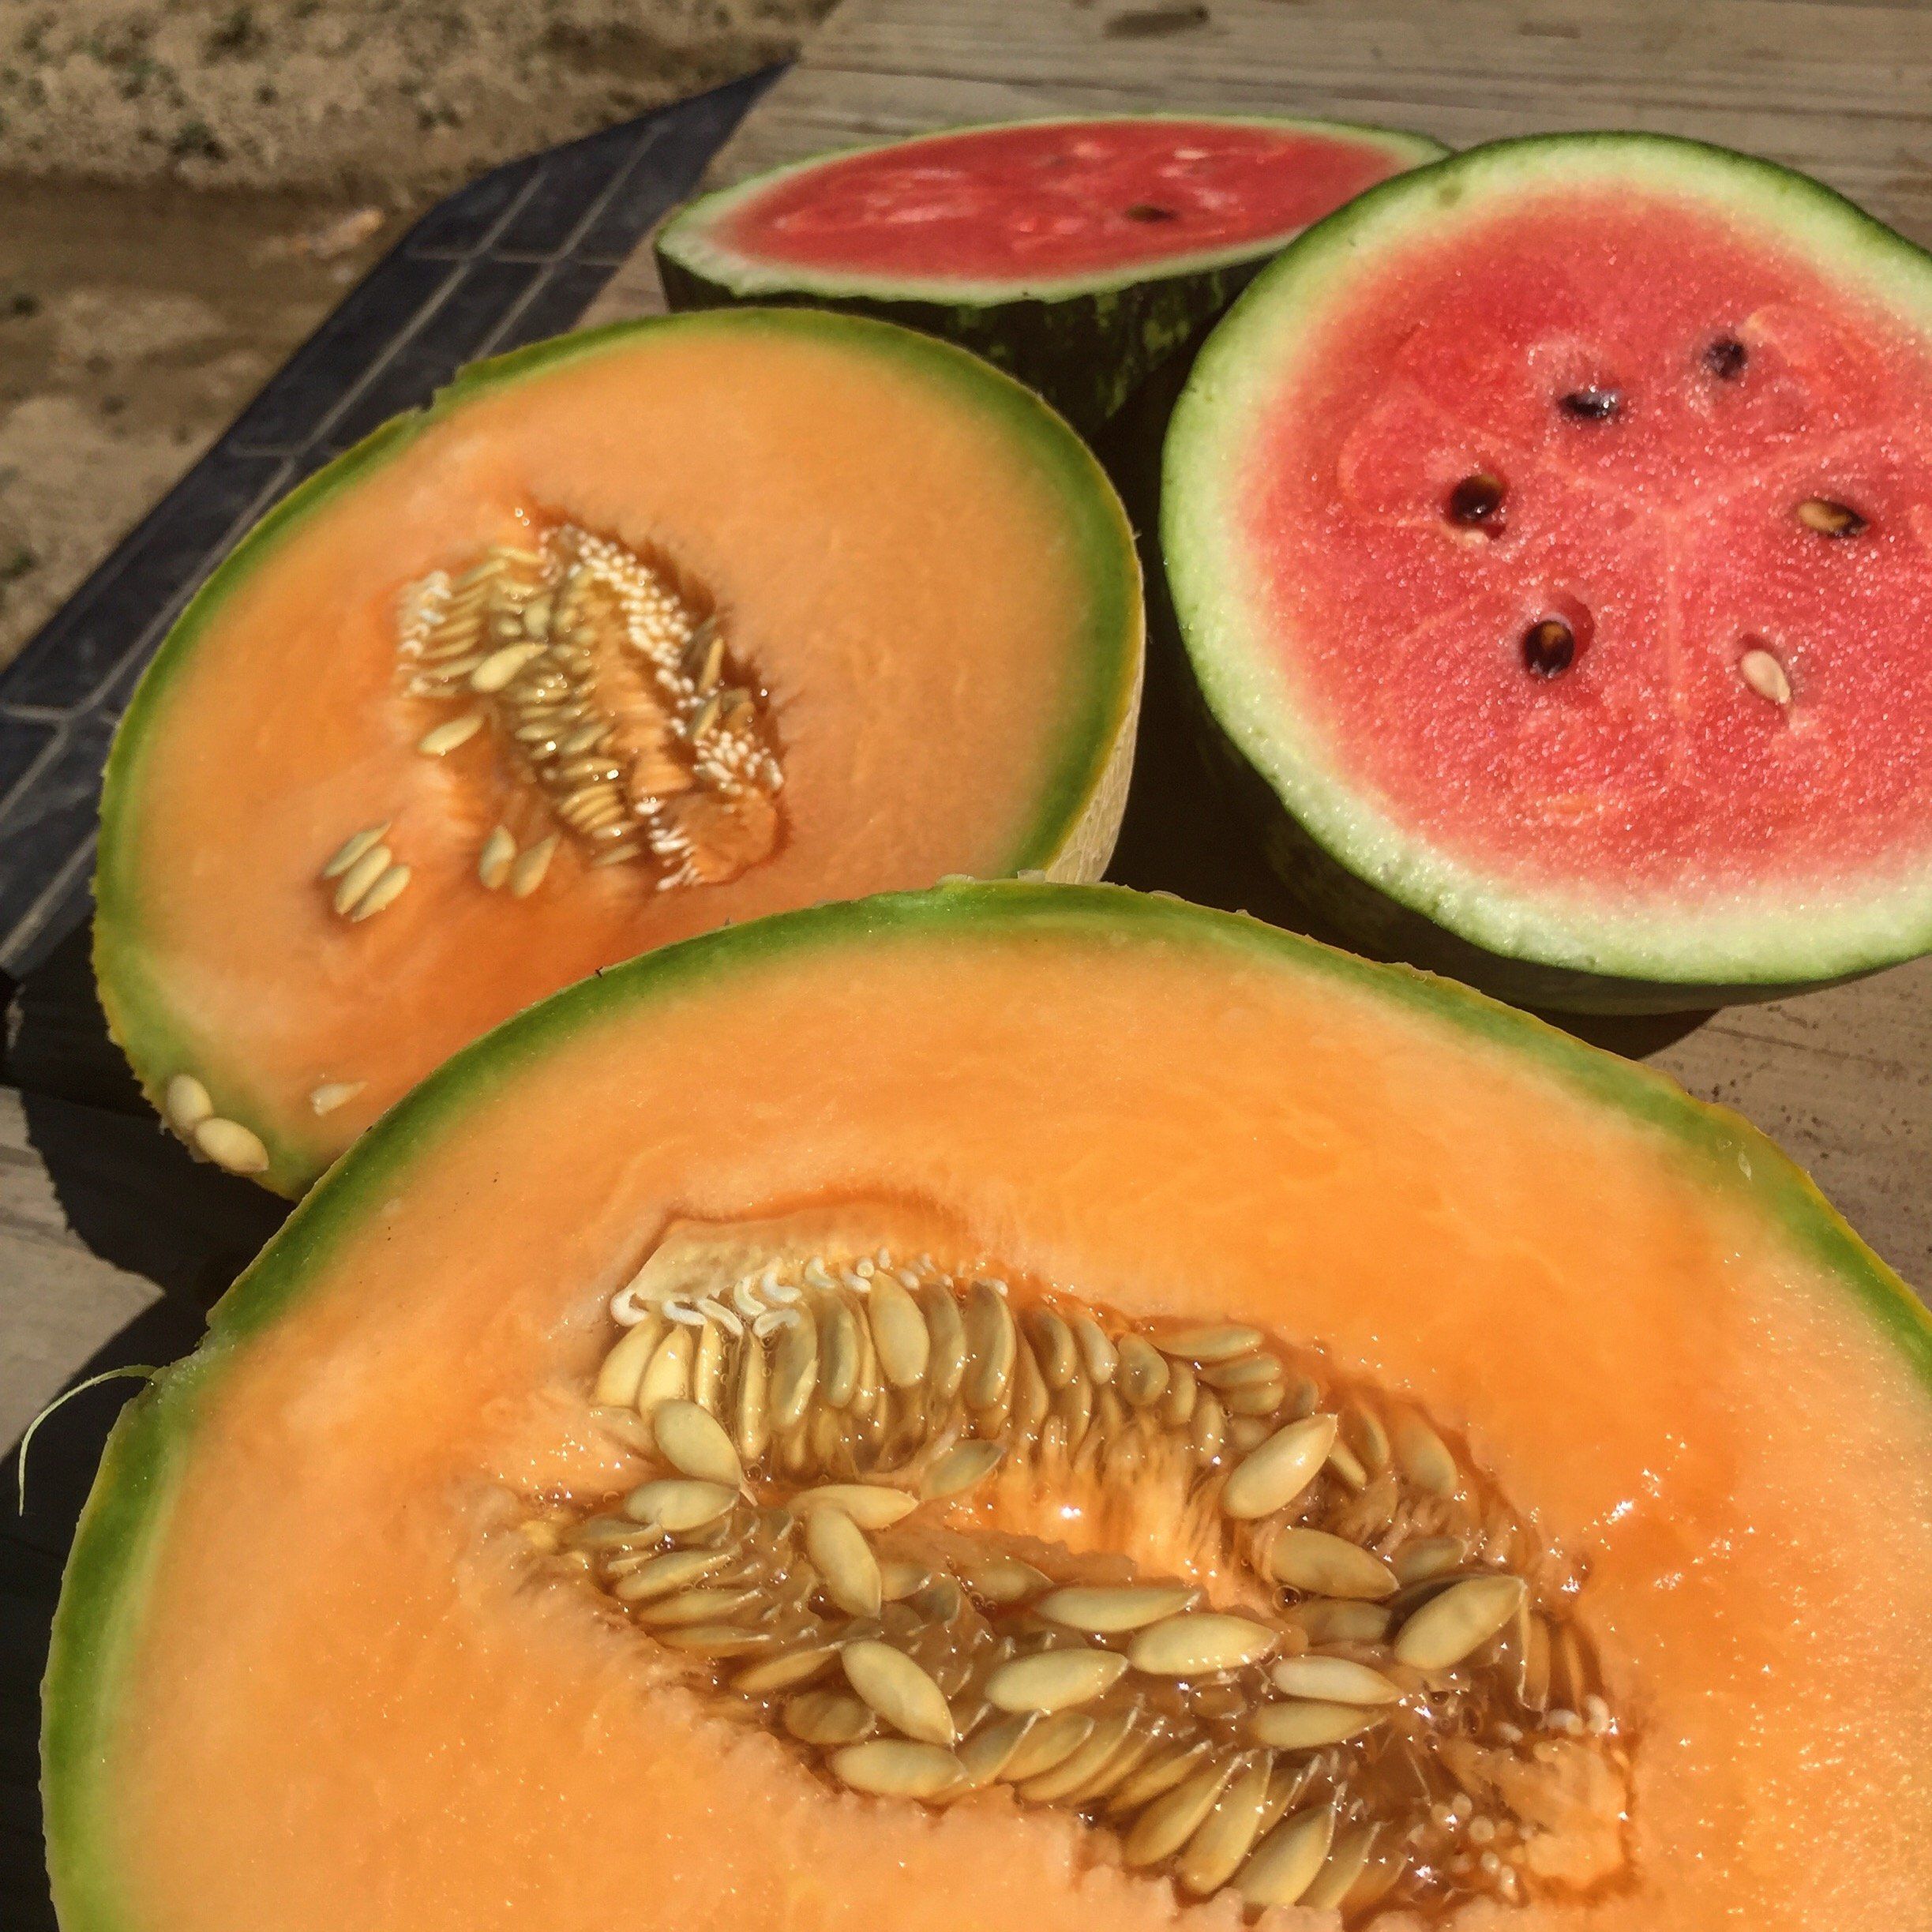 Previous Happening: Week 10!  It's Melon Season!